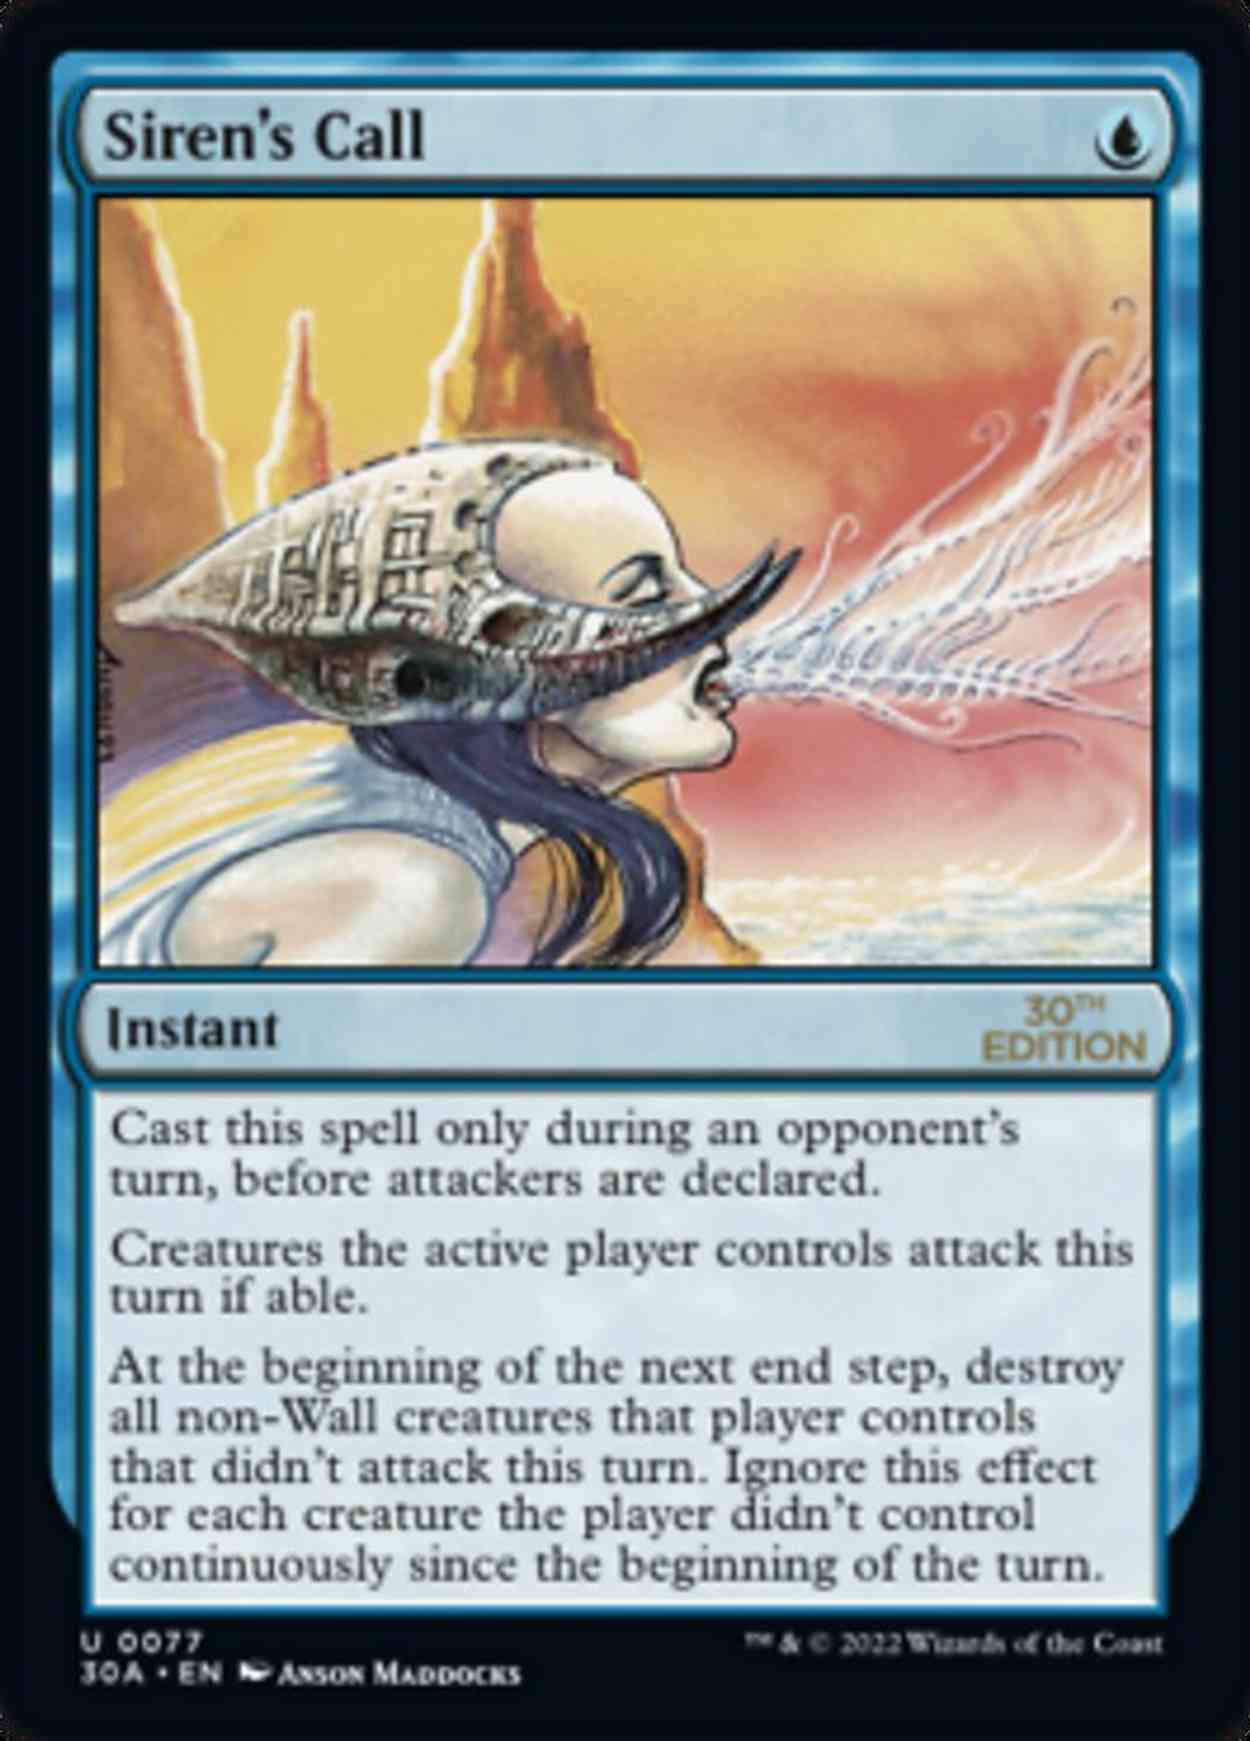 Siren's Call magic card front